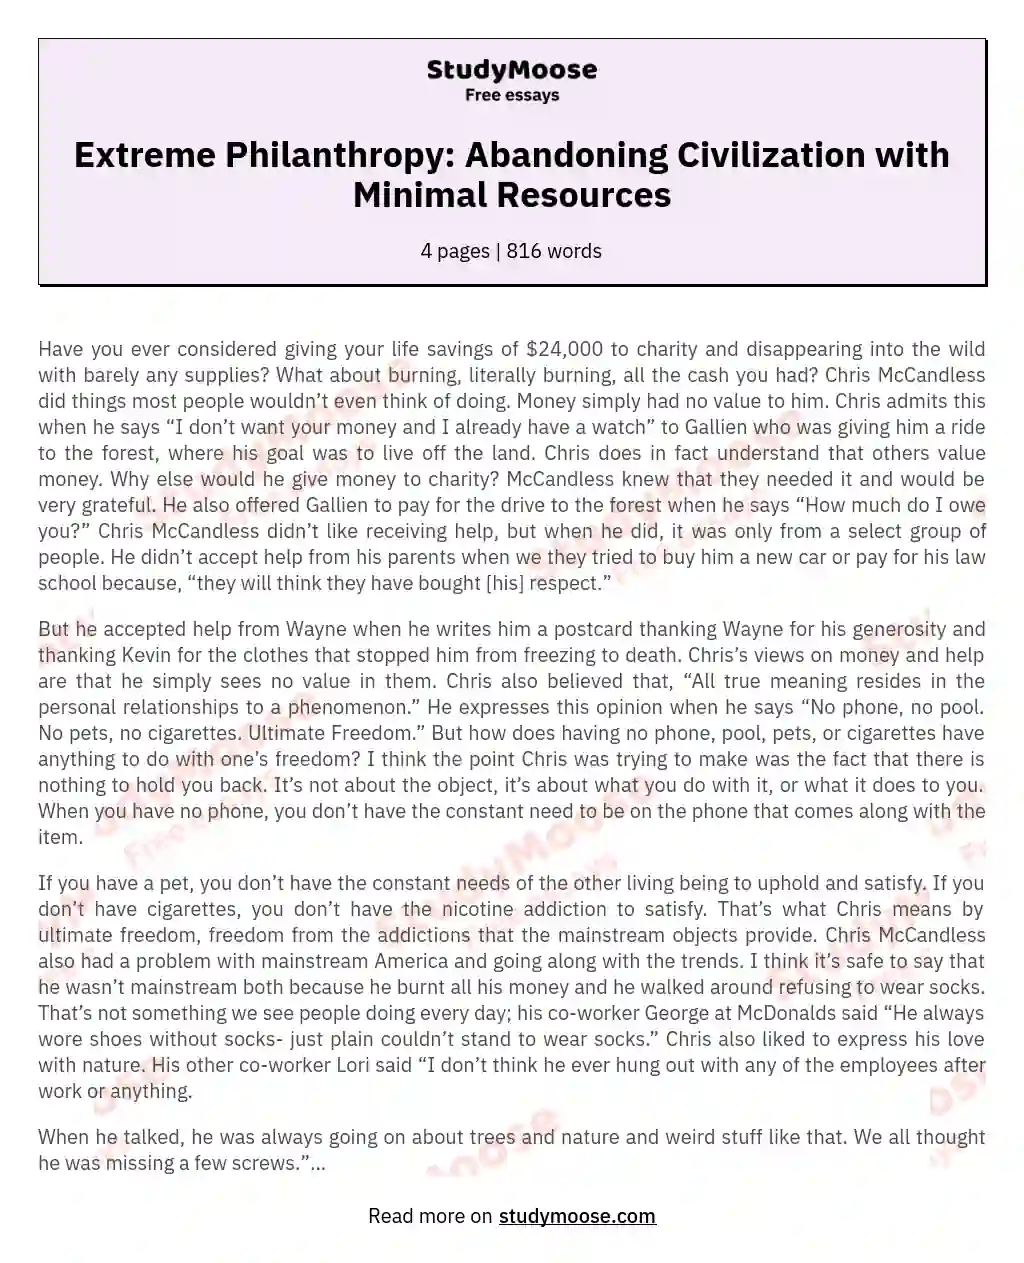 Extreme Philanthropy: Abandoning Civilization with Minimal Resources essay